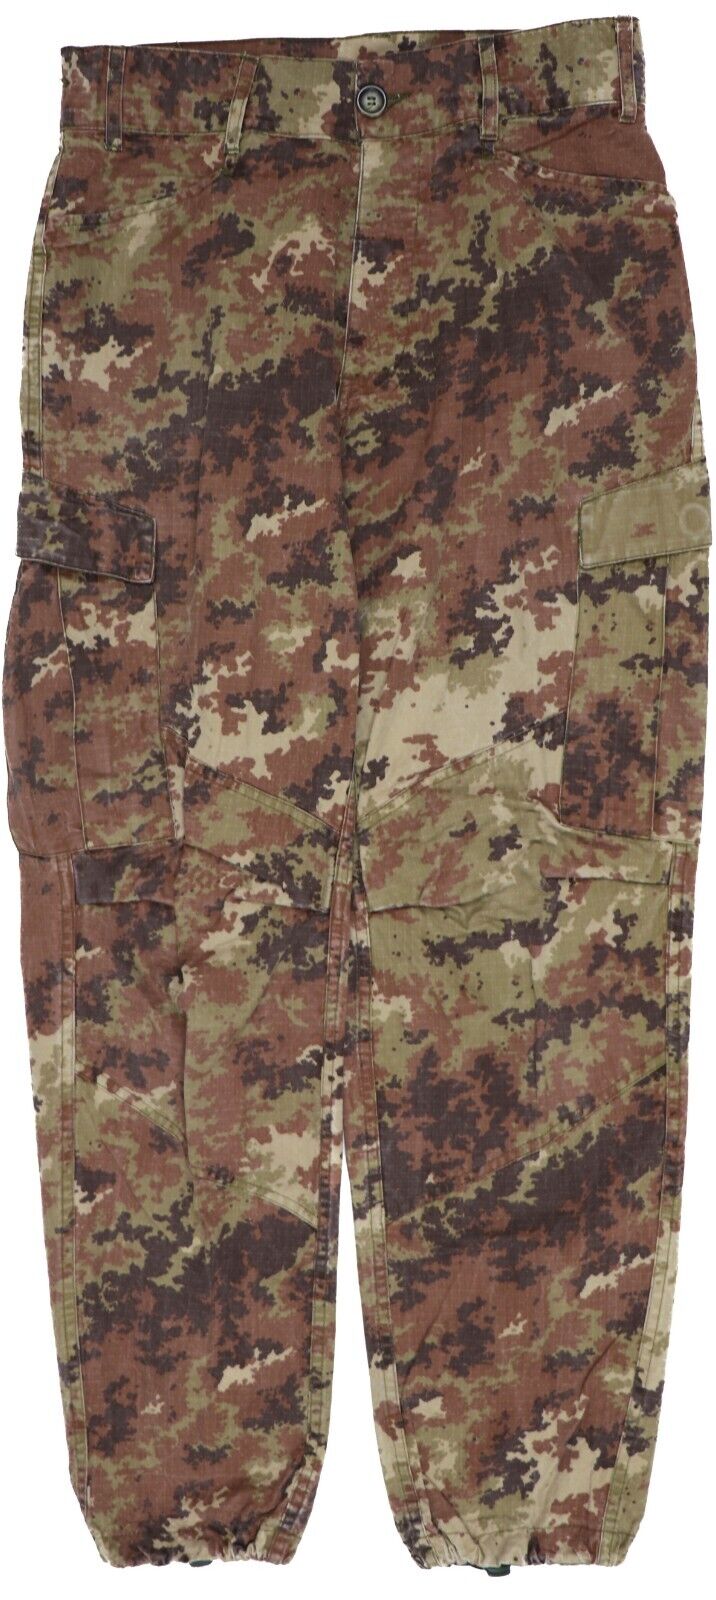 Small - ESERCITO Italian Army Ripstop Vegetato Camo Field Pants Trousers